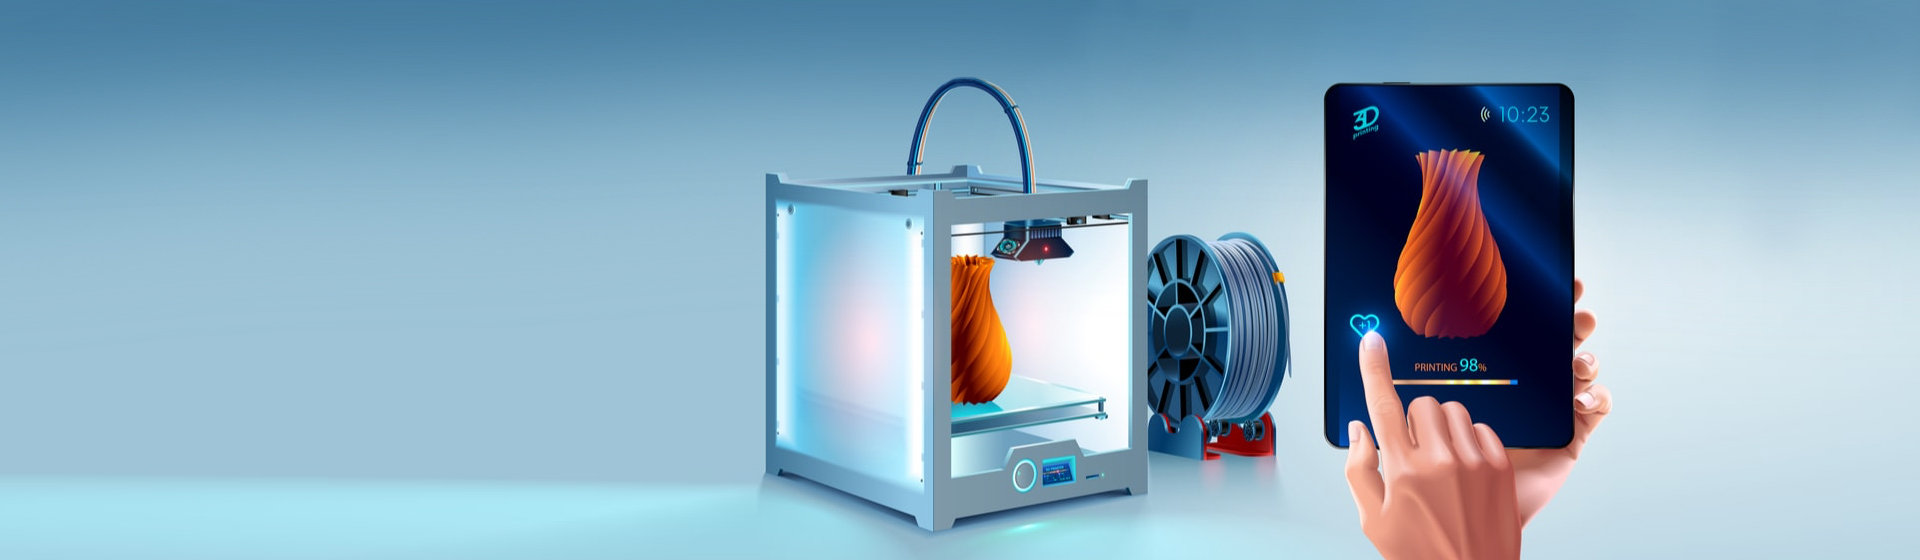 Printing 3D